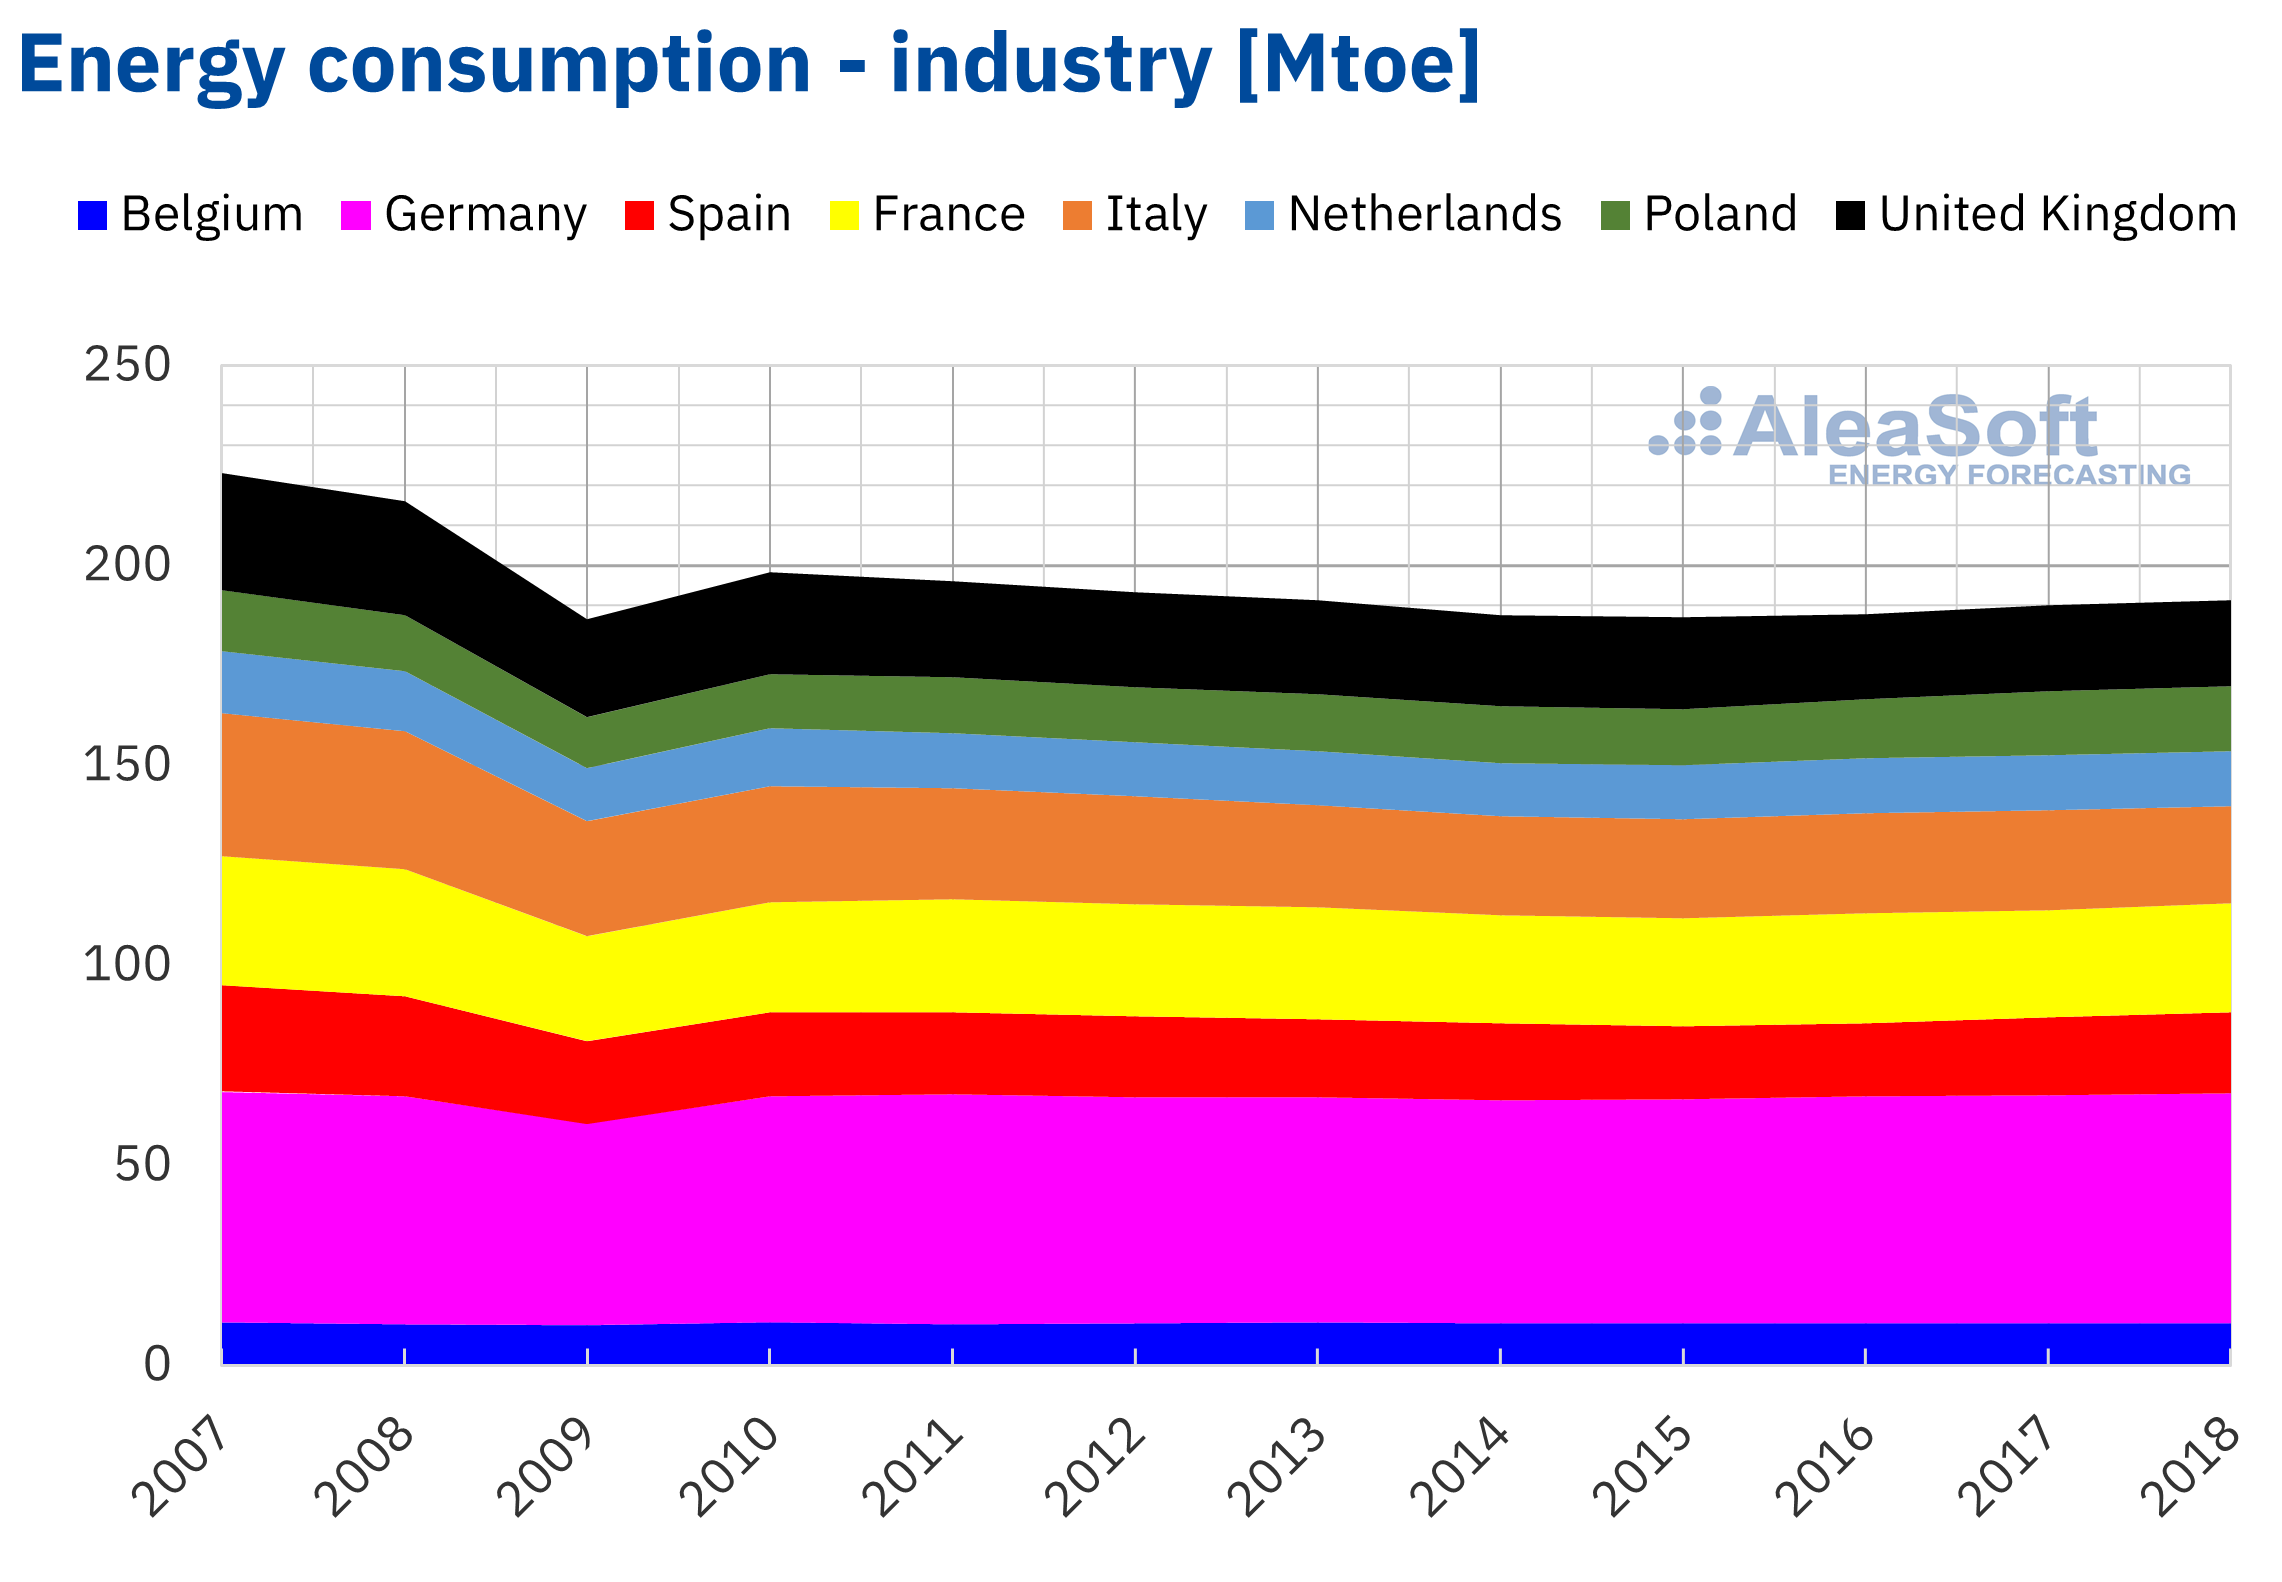 AleaSoft - Energy consumption industry Europe